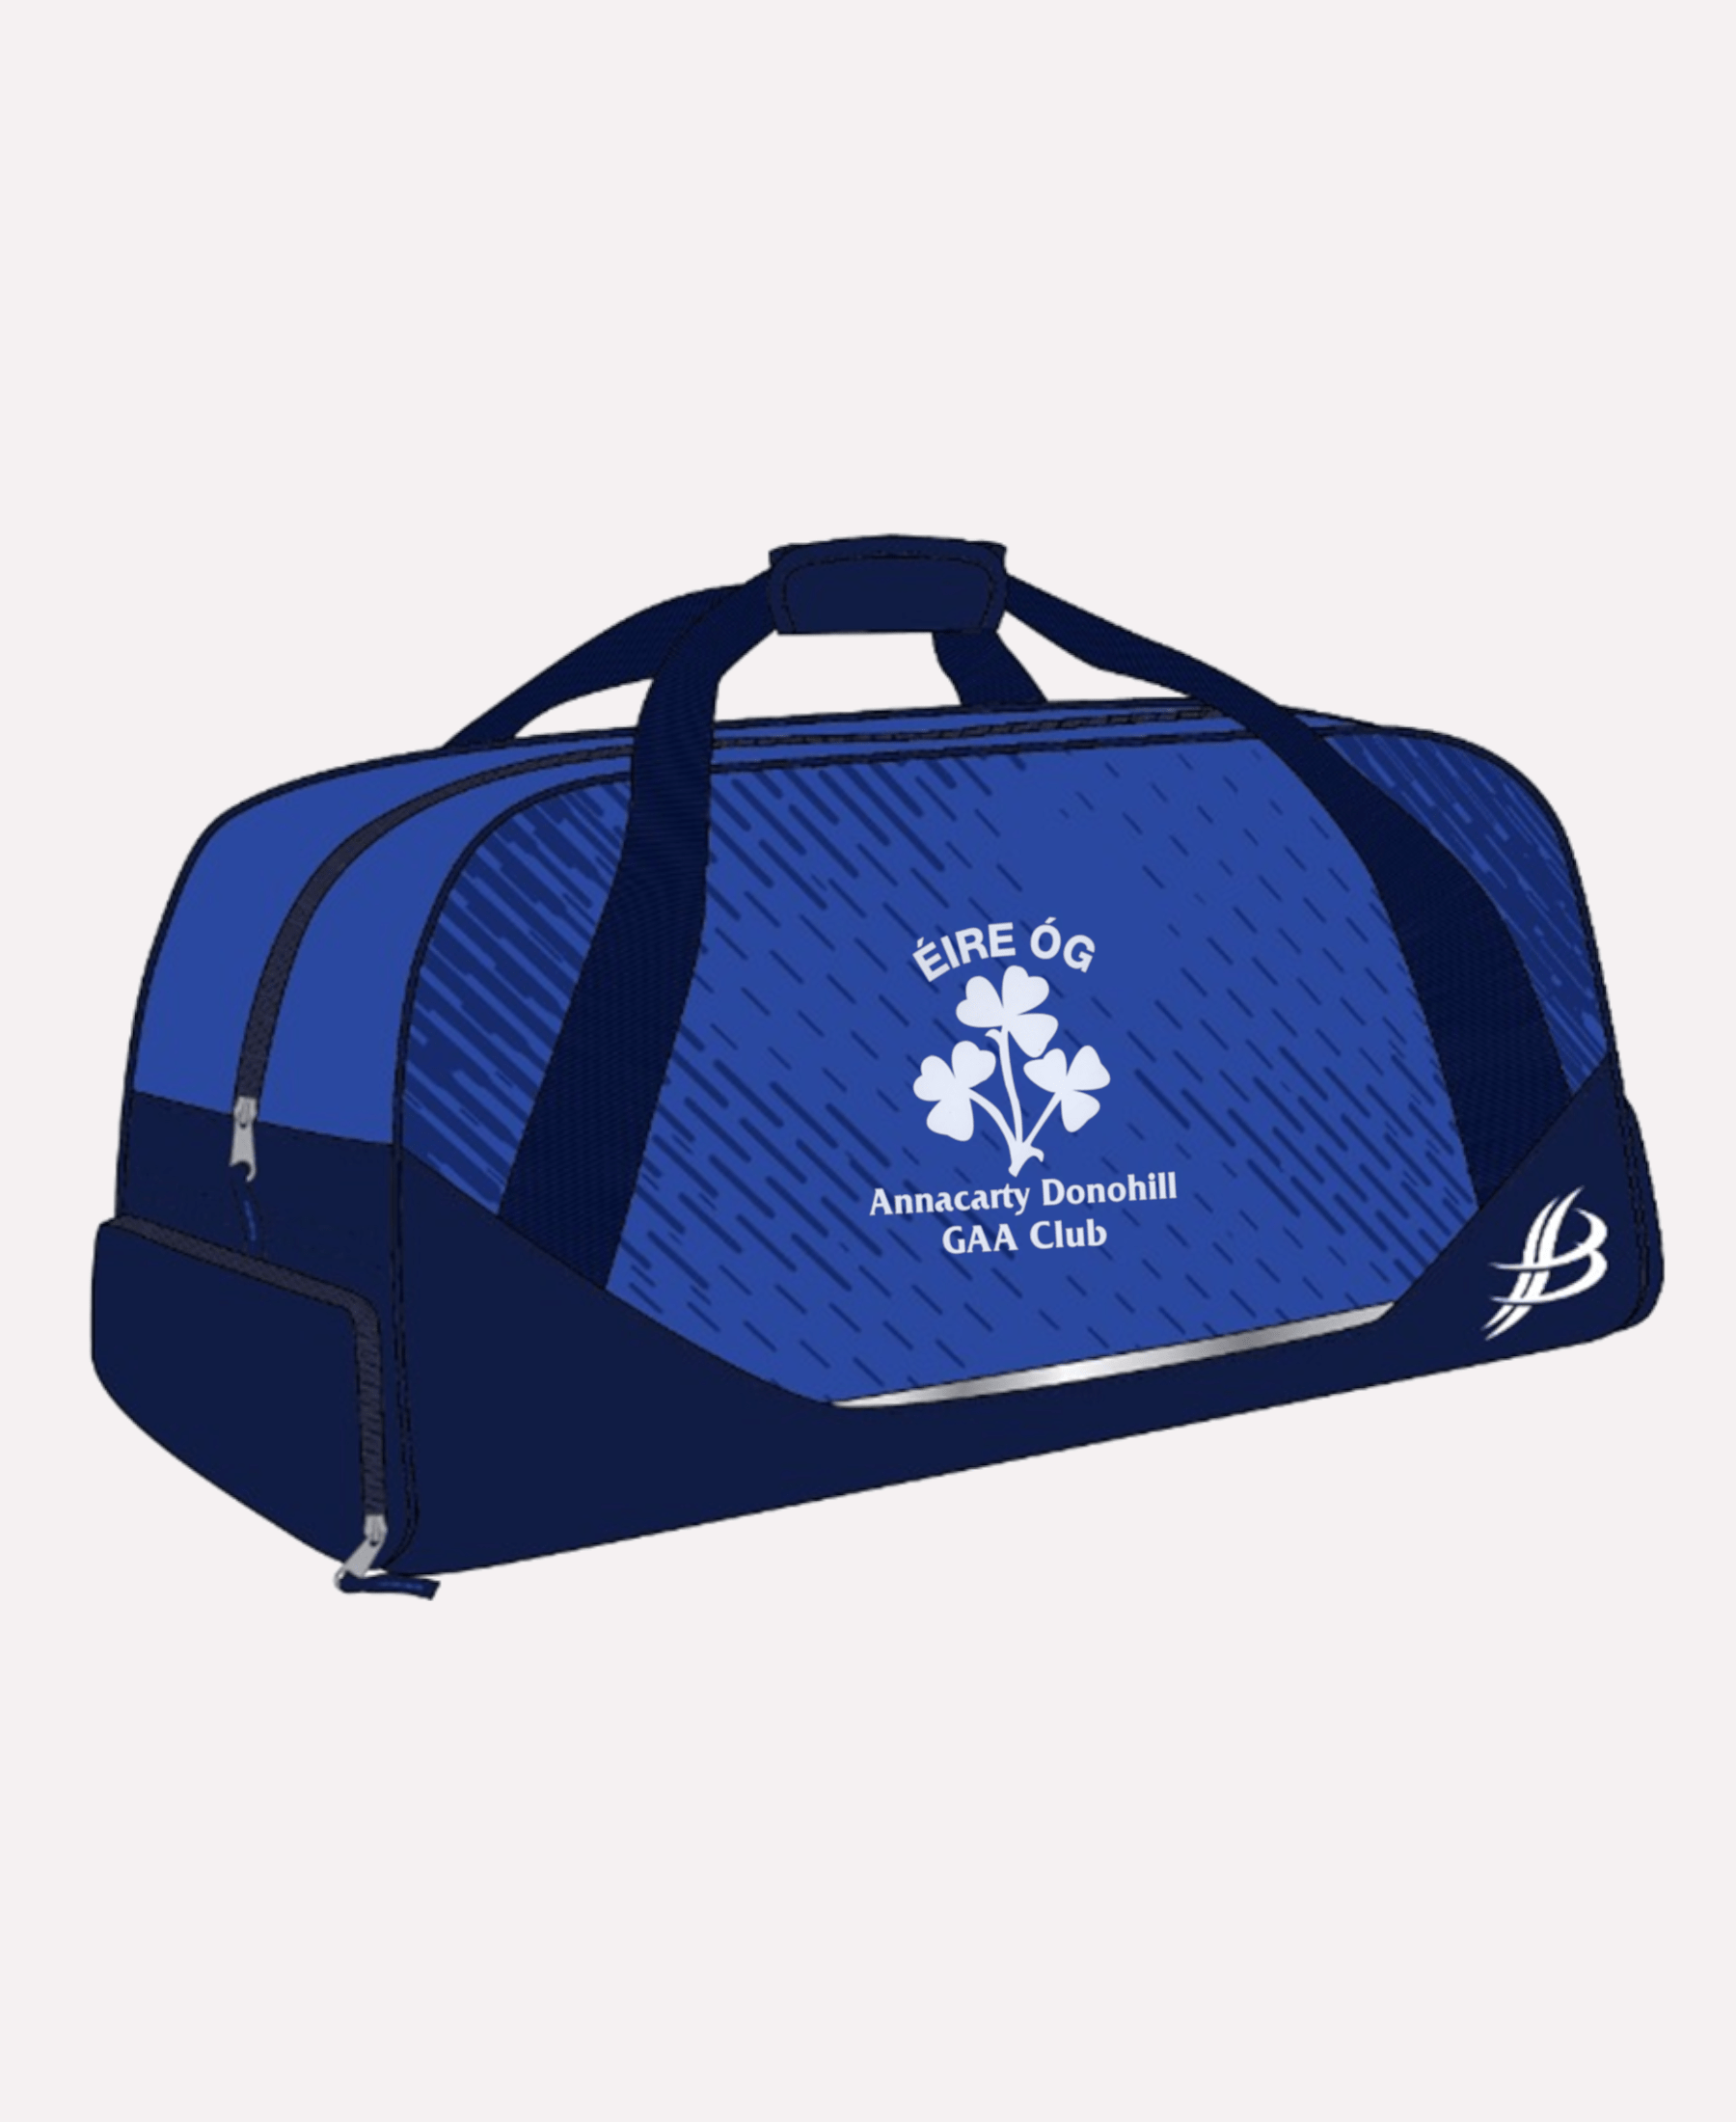 Eire Og Annacarty Donohill GAA BUA Gear Bag - Bourke Sports Limited